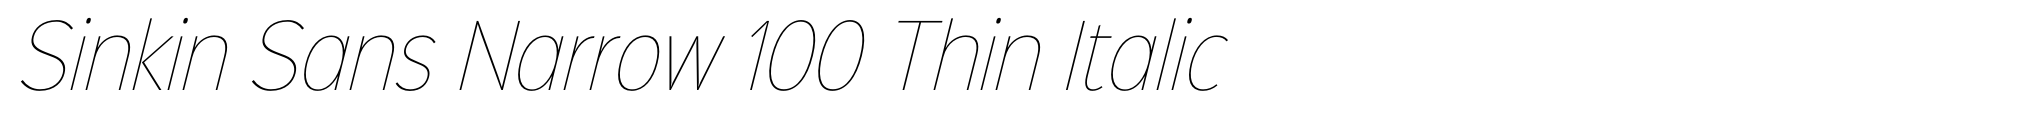 Sinkin Sans Narrow 100 Thin Italic image